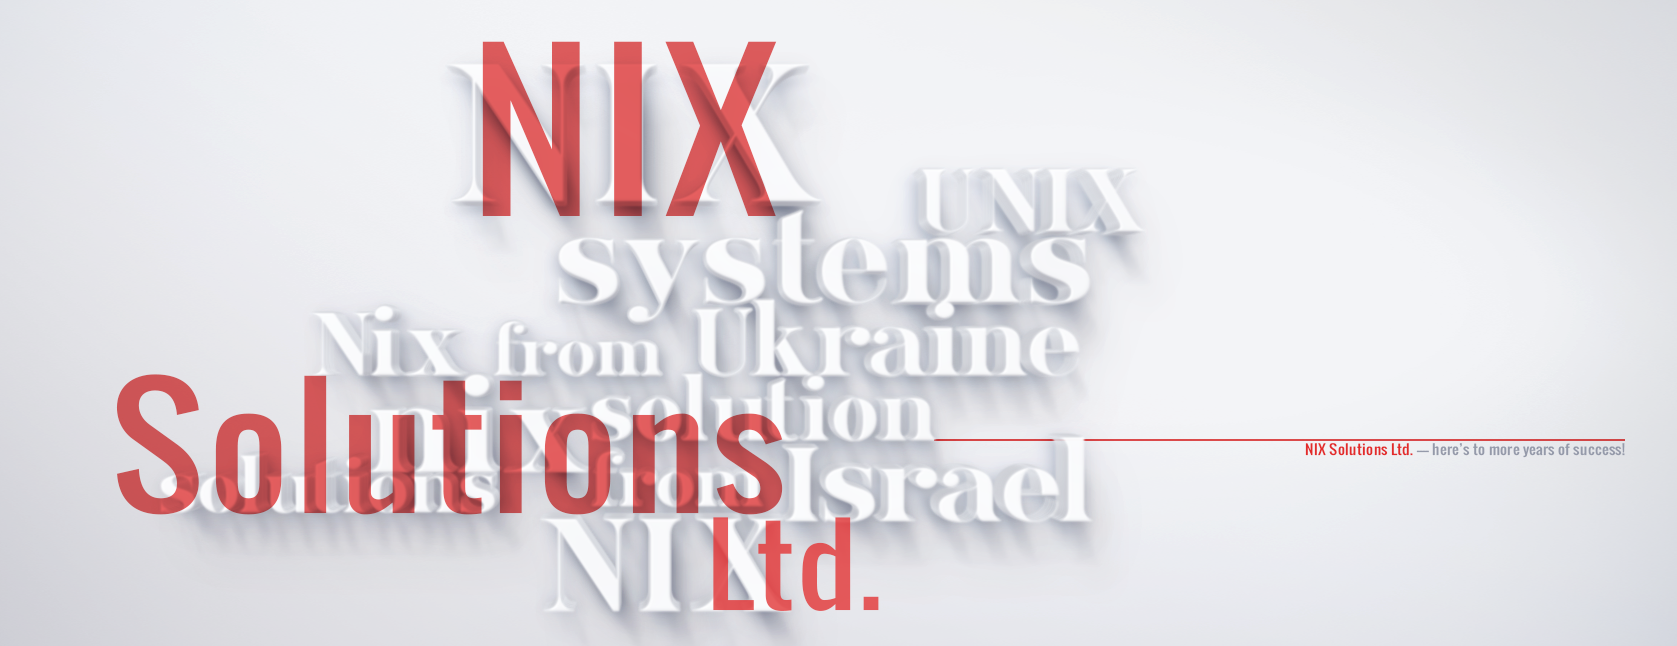 NIX Solutions Ukraine